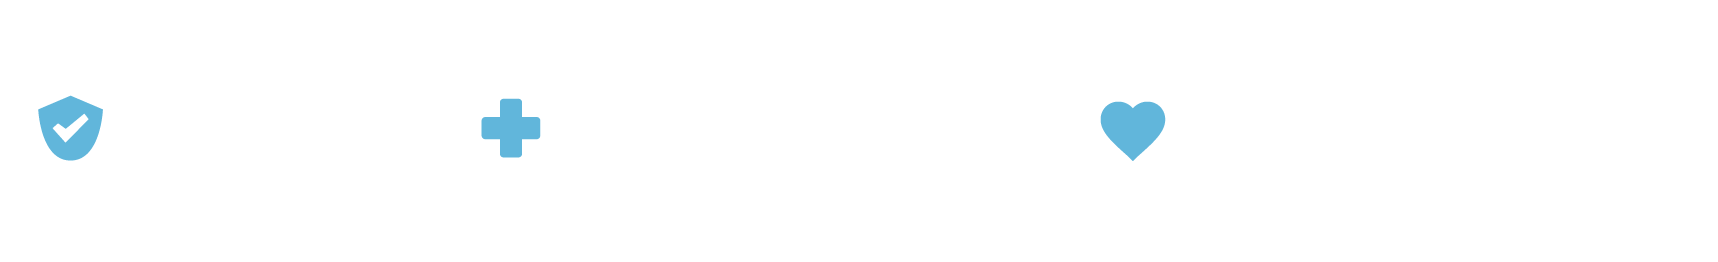 Life | Health | Medicare